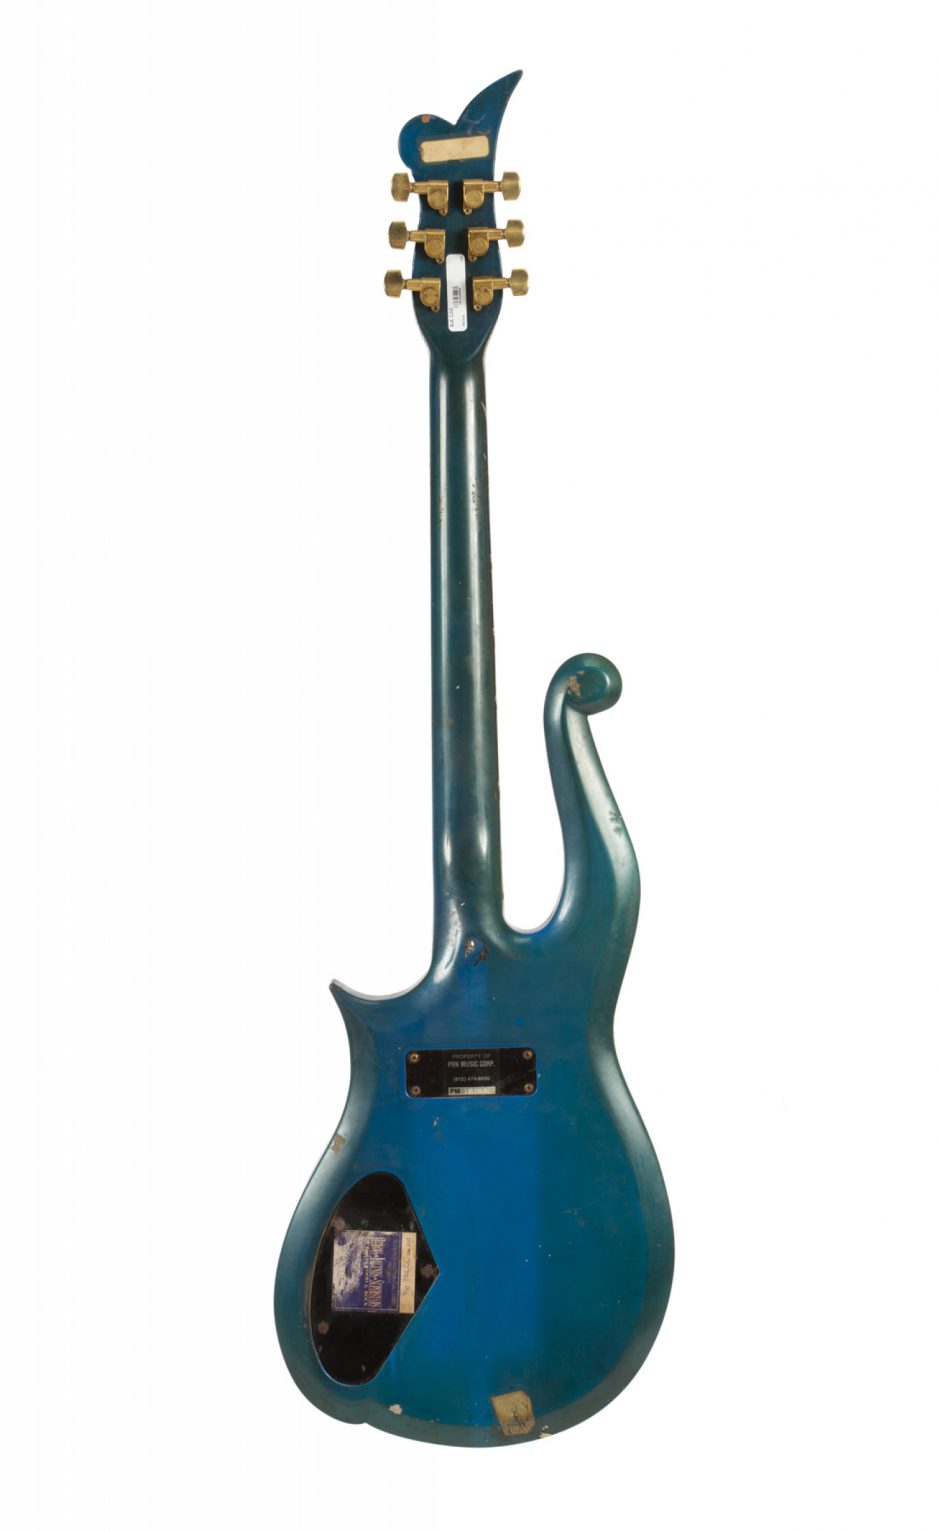 Aukcione parduodama legendinė Prince‘o gitara „Blue Angel“